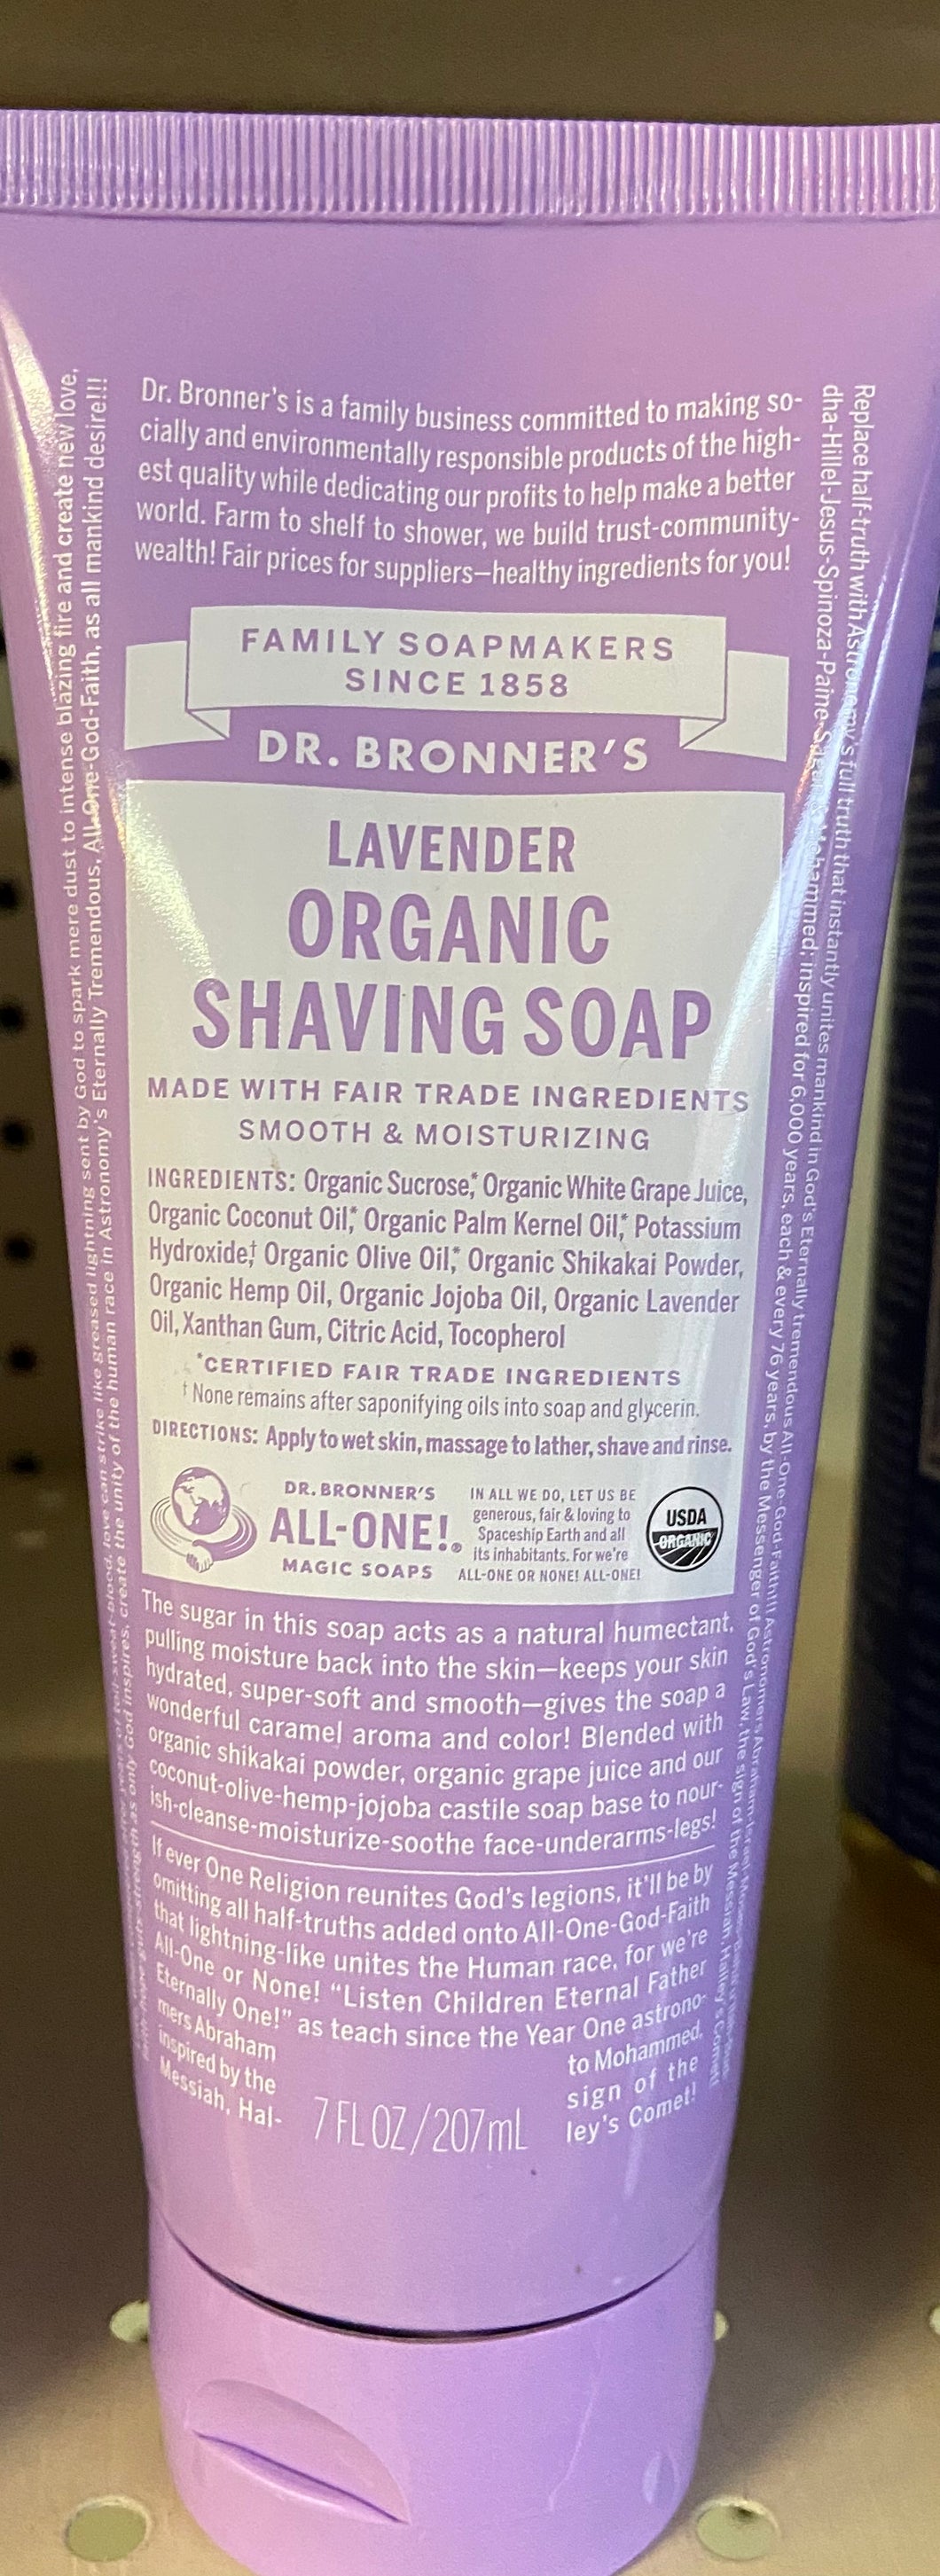 Shave Gel, Lavender, Organic, Dr. Bronner's, Shaving Soap